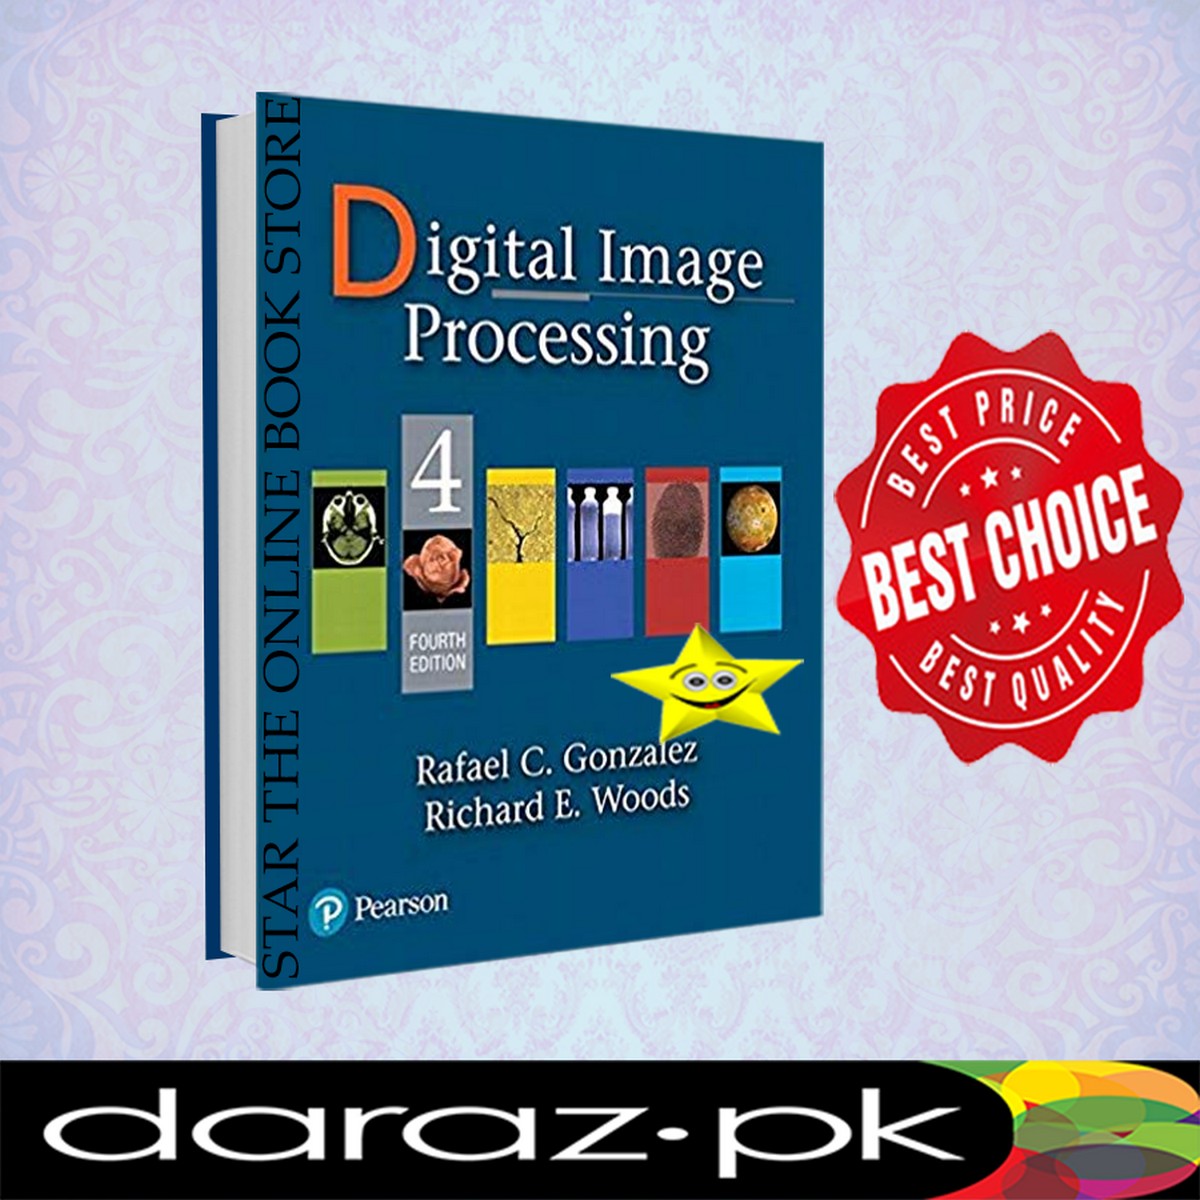 Digital Image Processing (4th Edition) By Rafael C. Gonzalez,richard E. Woods